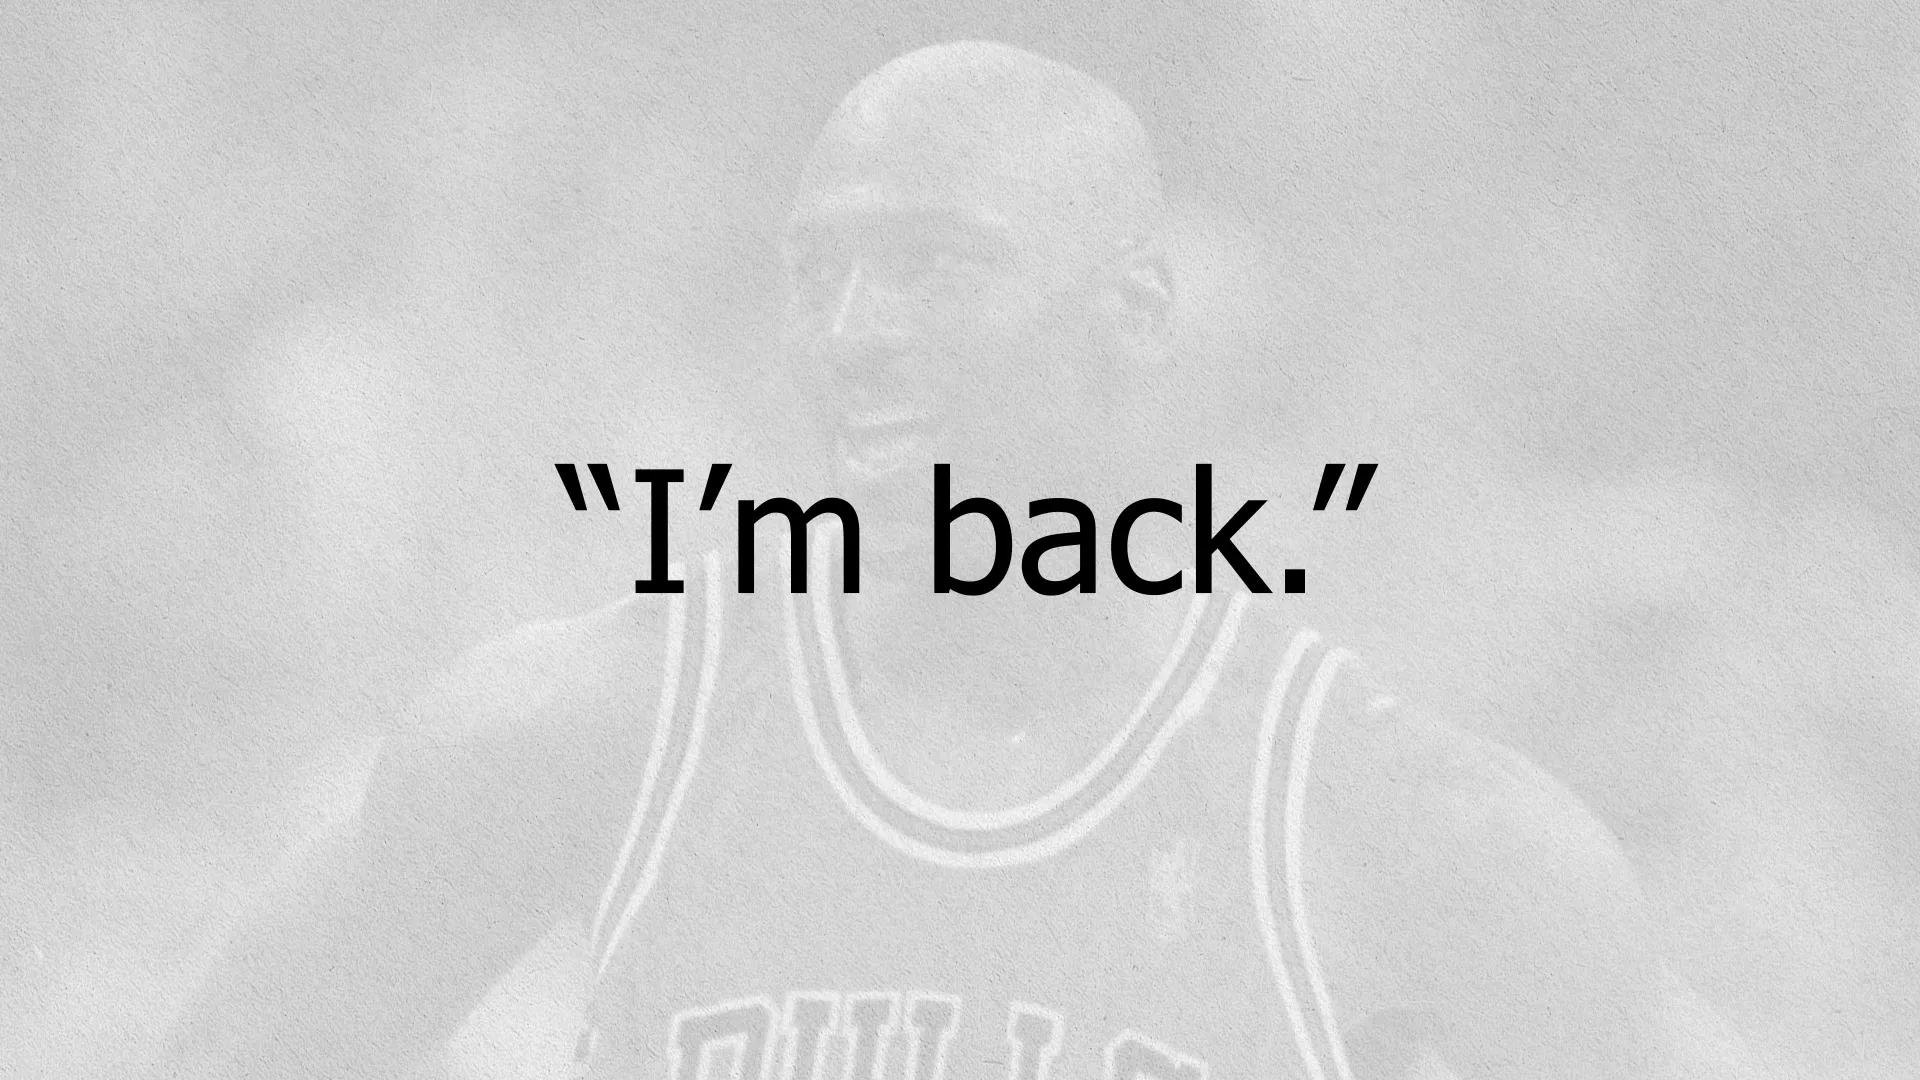 Michael Jordan quits baseball in 1995 after spending a season in